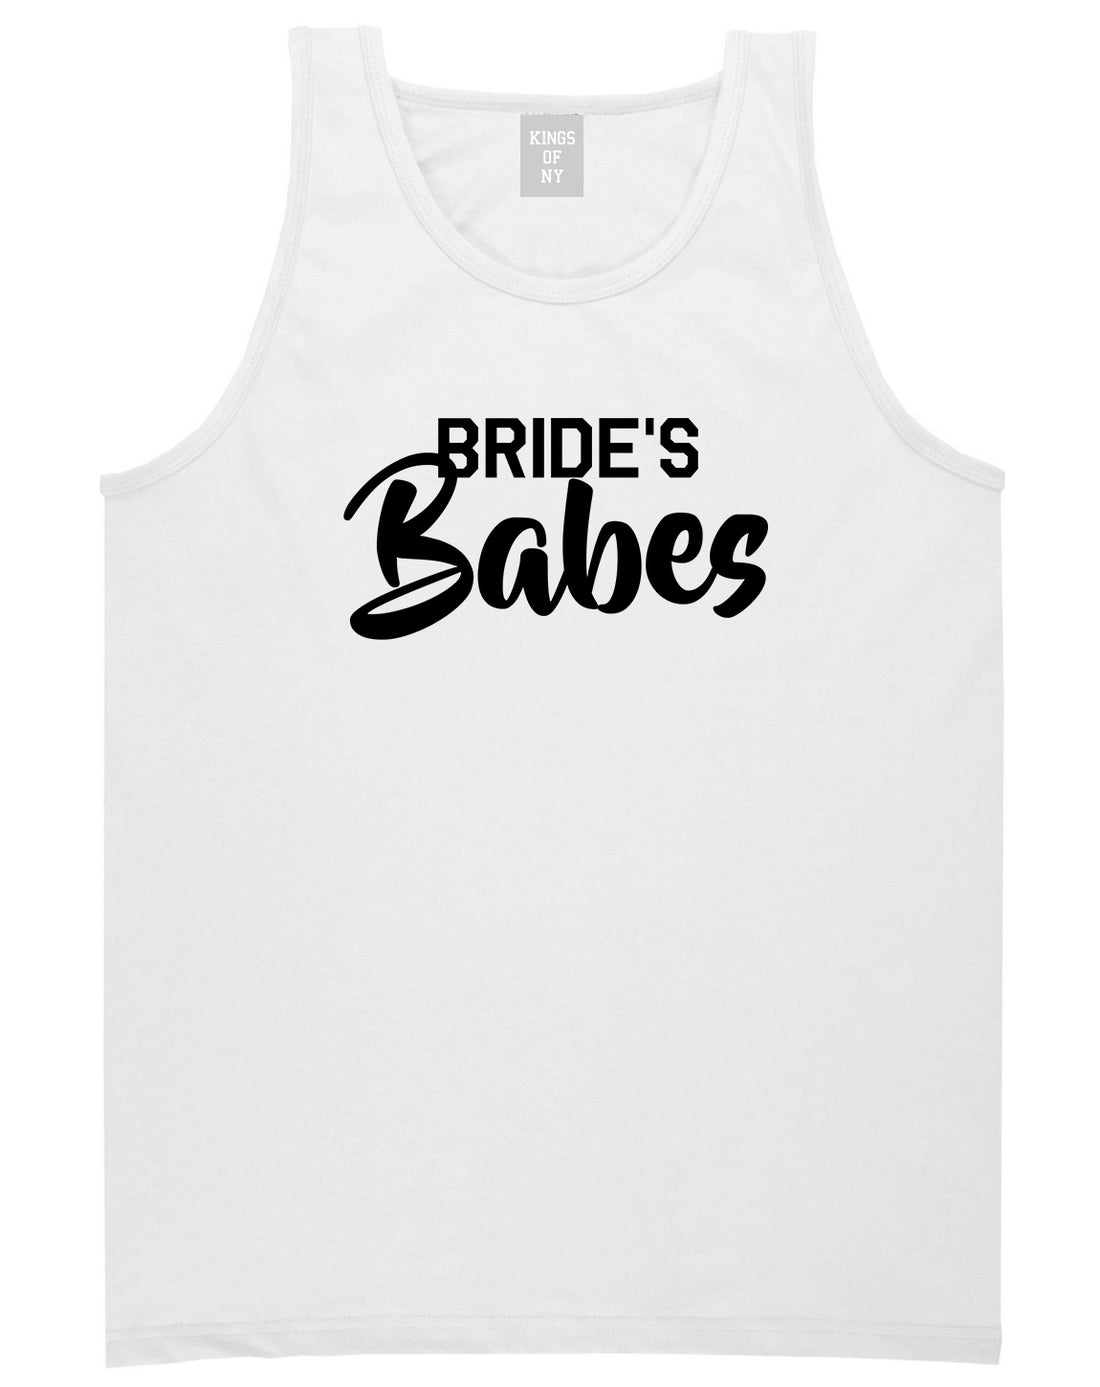 Brides Babes Wedding Mens White Tank Top Shirt by KINGS OF NY